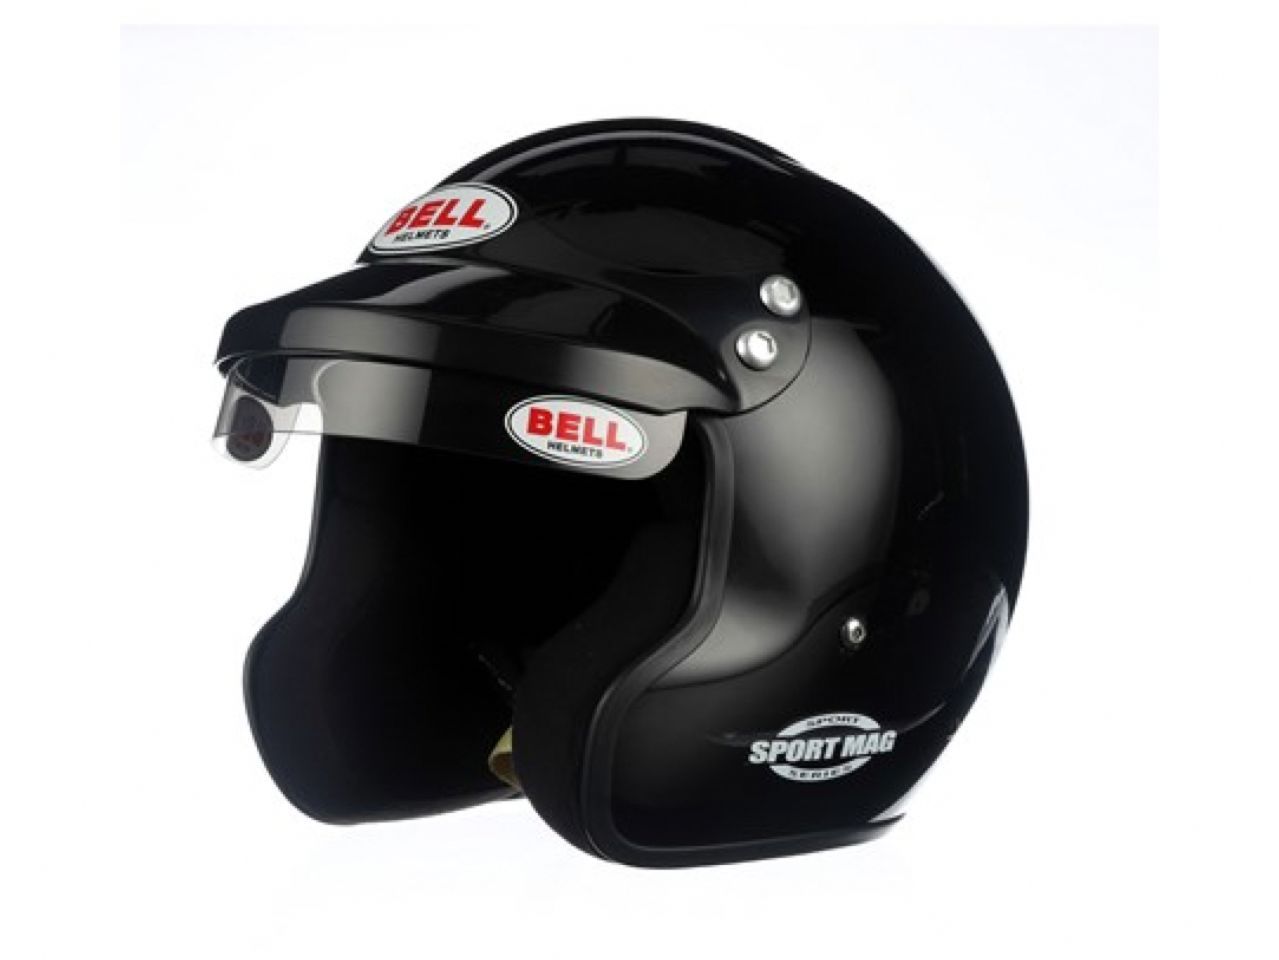 Bell Helmets 1426012 Item Image